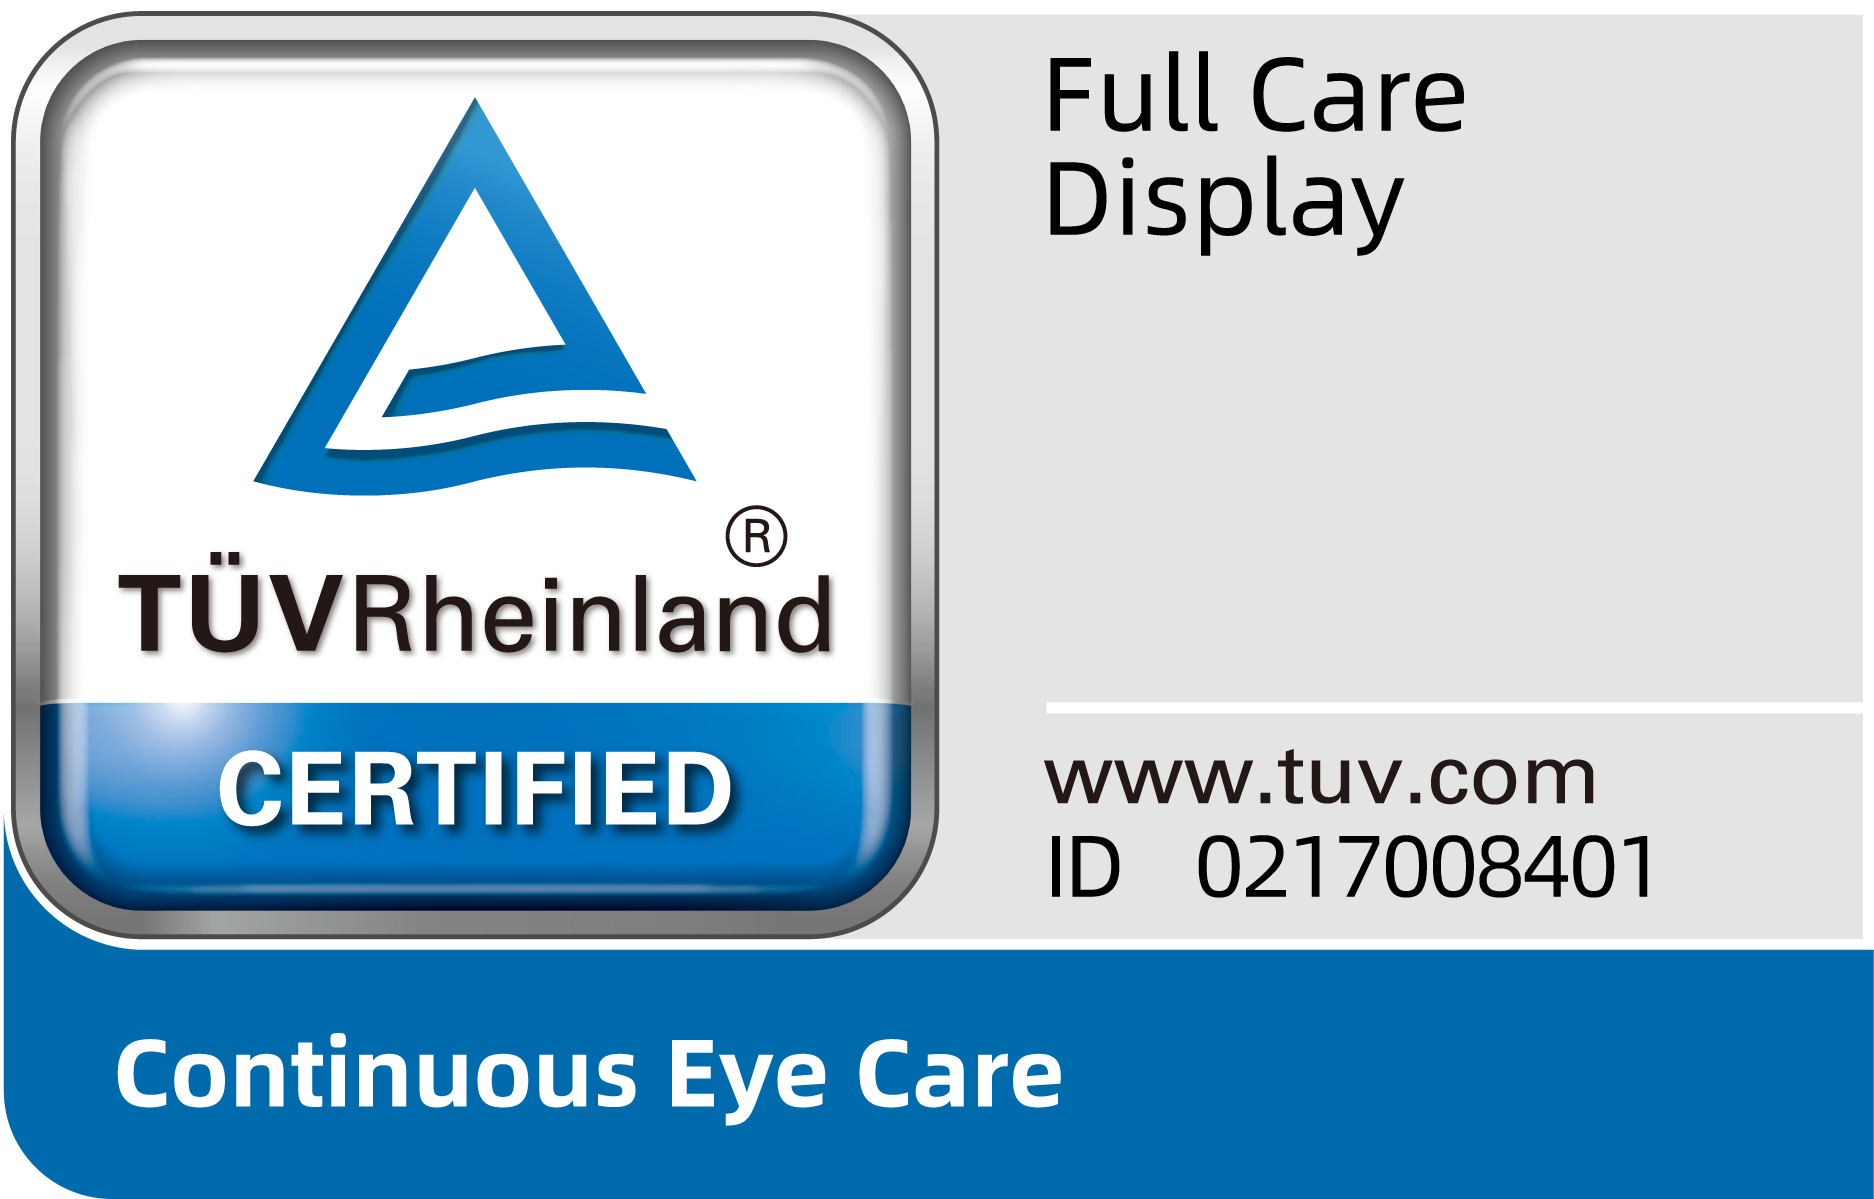 TÜV Rheinland Full Care Display Certification. 1